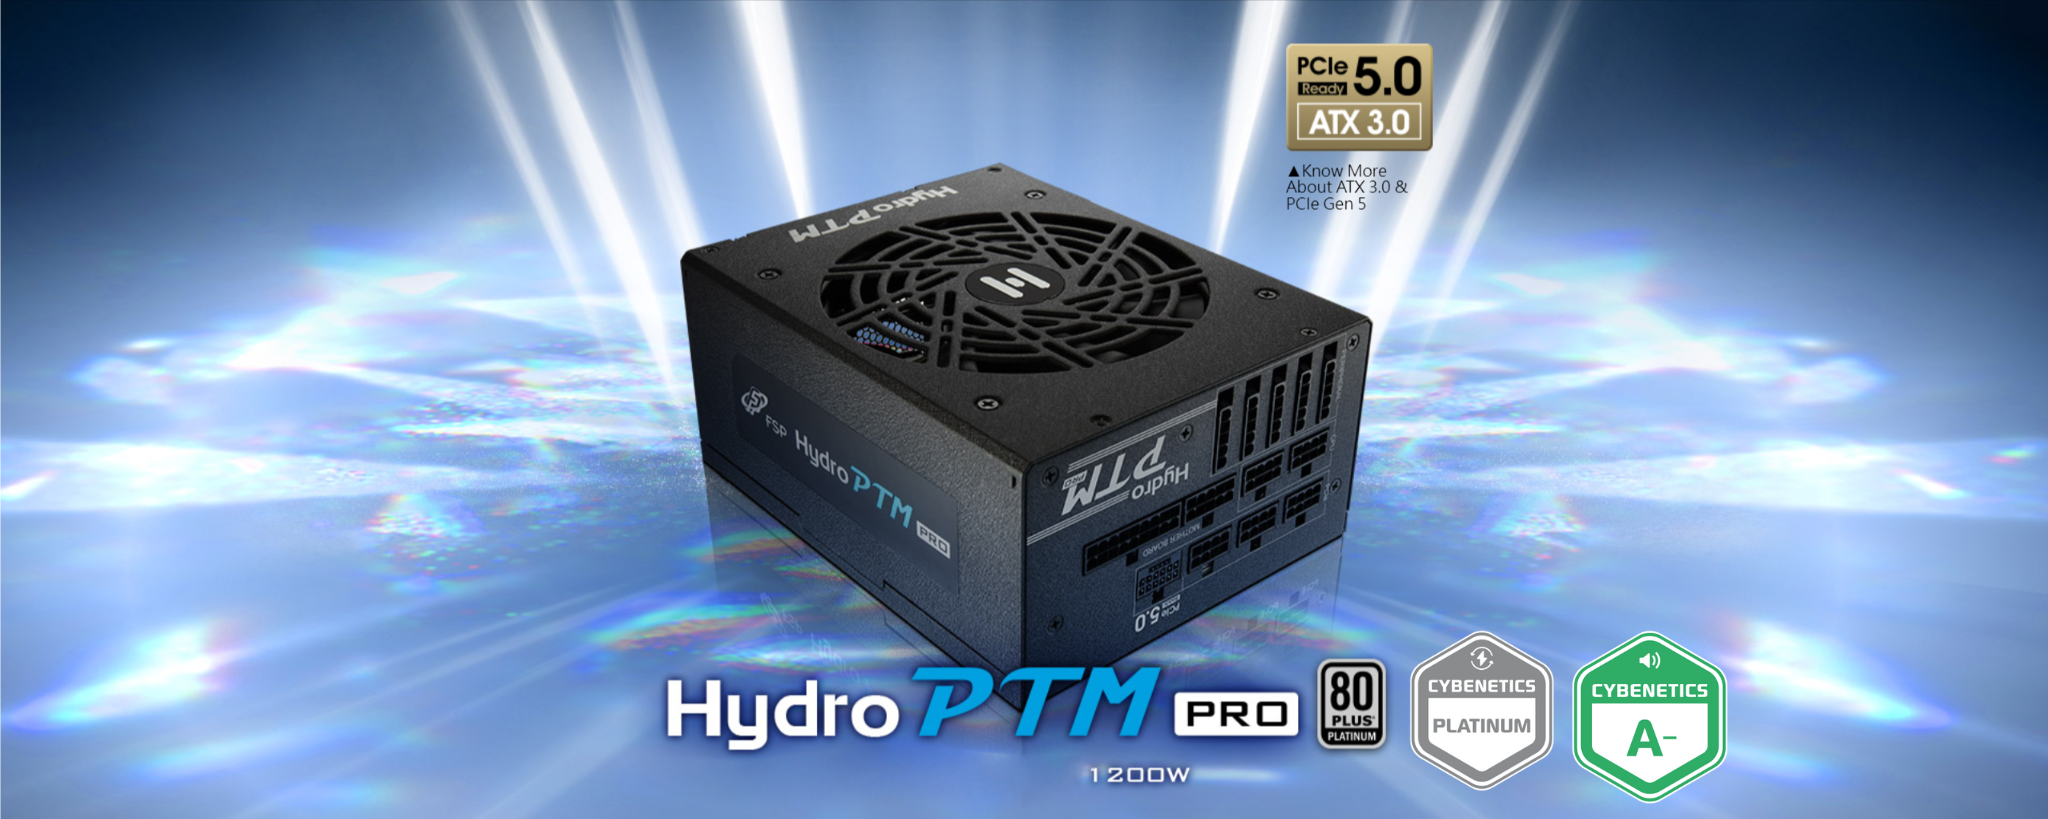 Hydro PTM pro 1200W